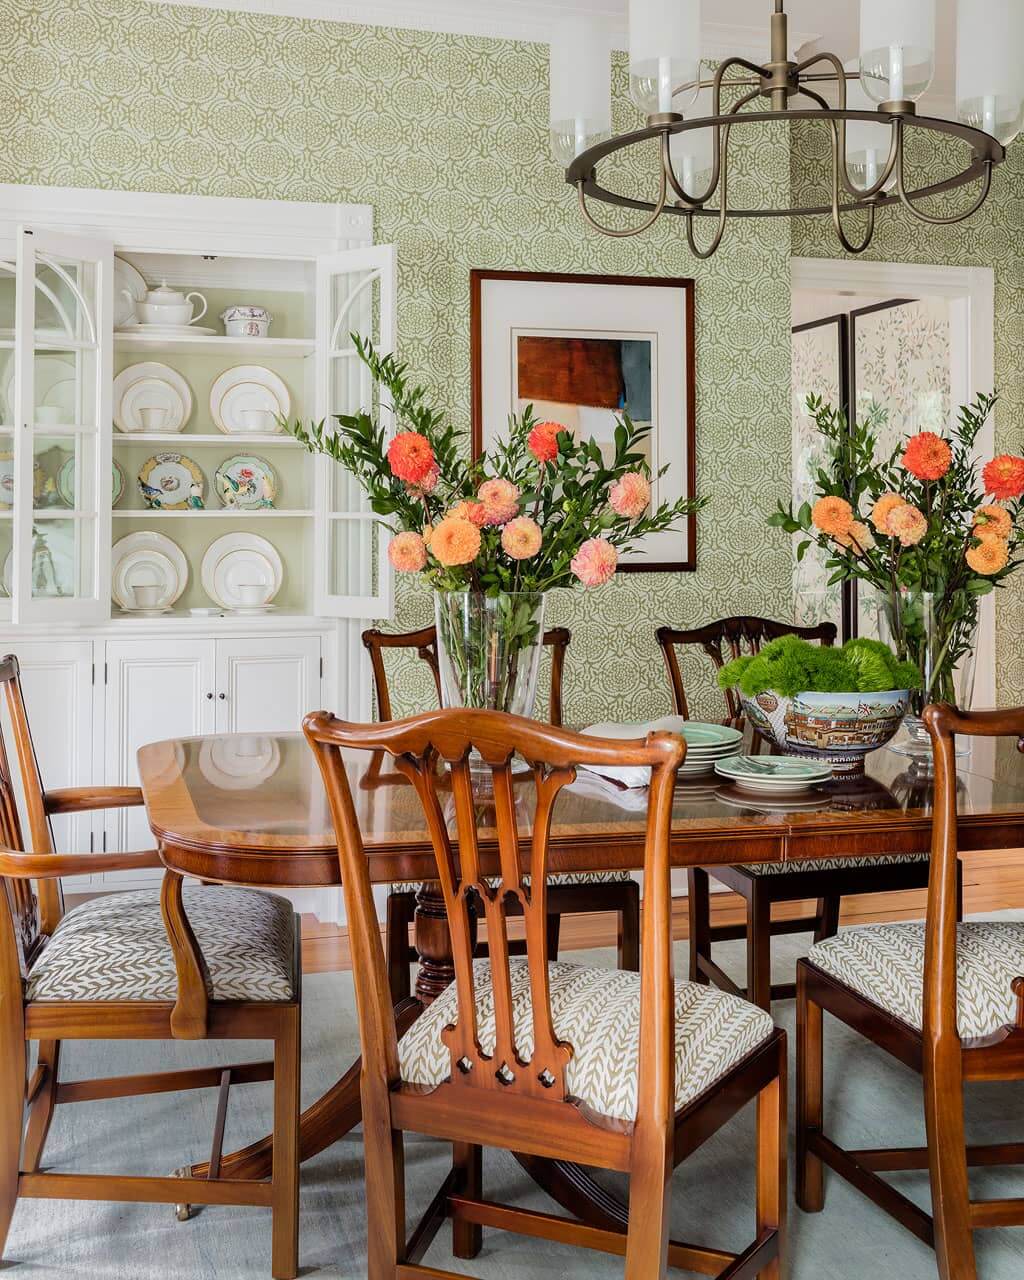 Concord Chic dining room with white china closet. Interior design by LeBlanc Interior Design.